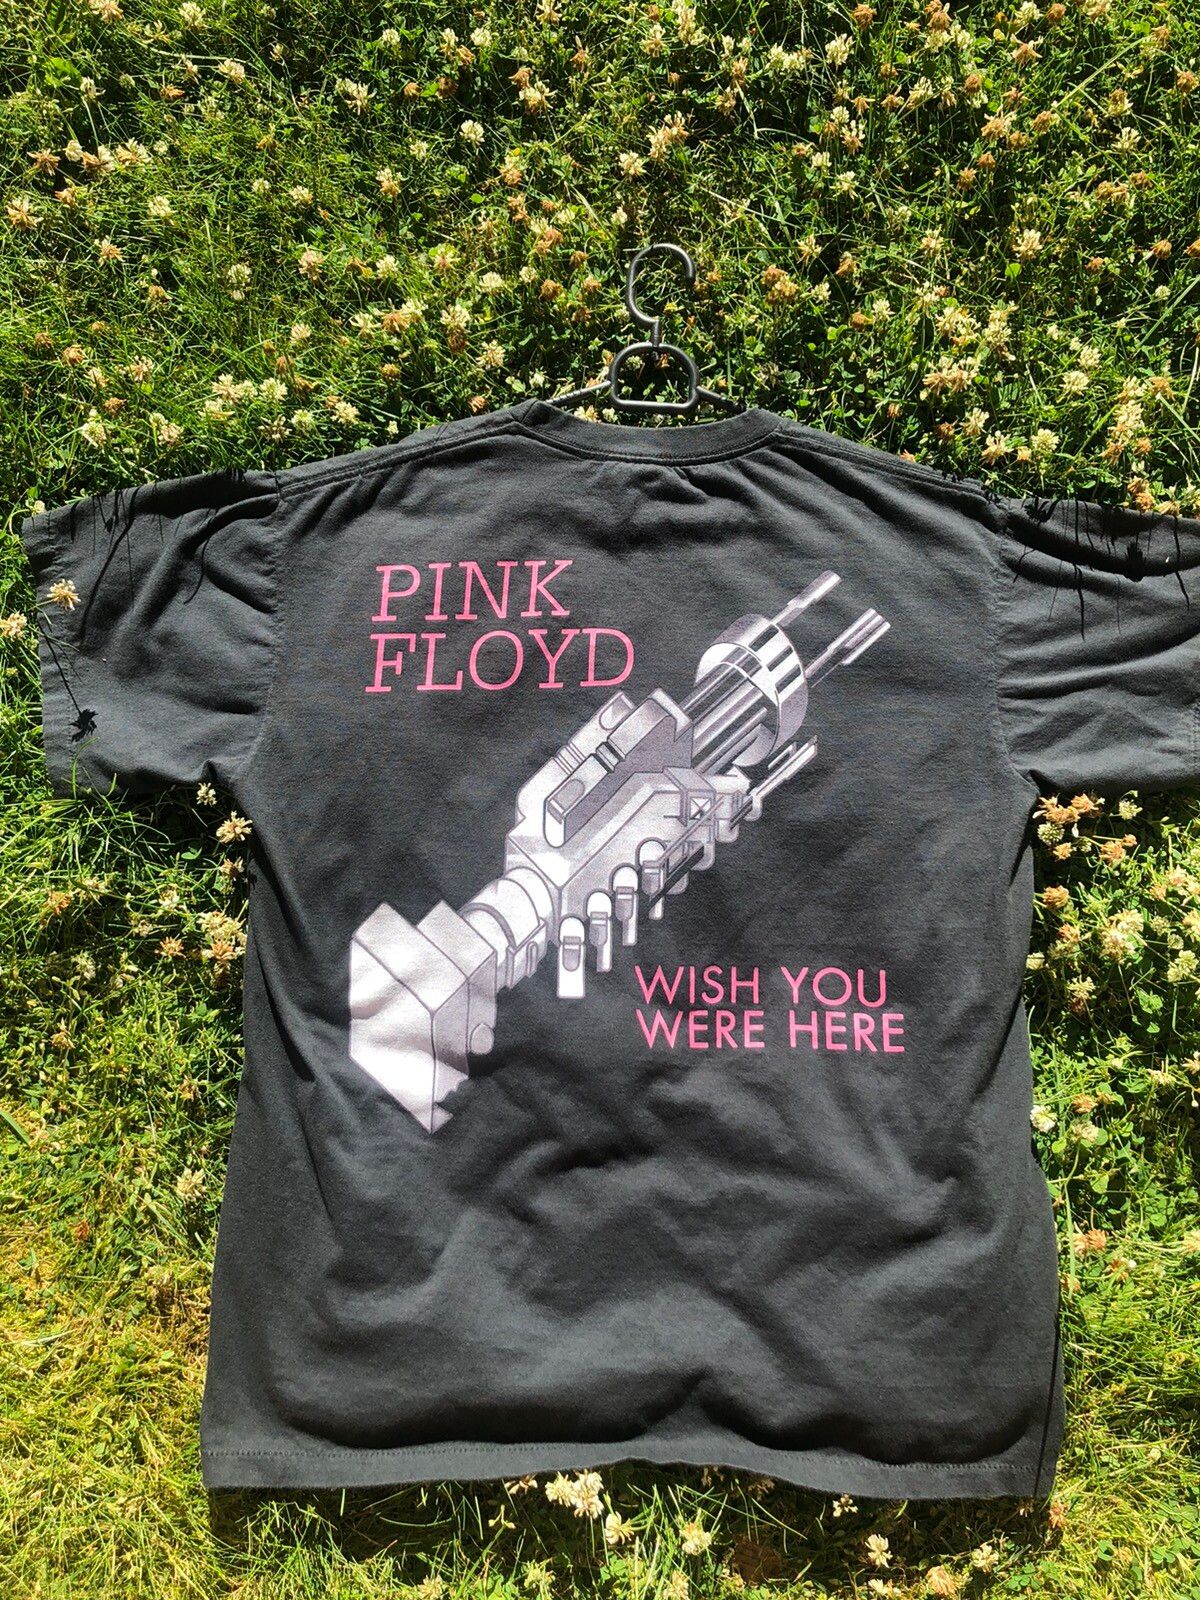 Pink Floyd Vintage 1992 Pink “Floyd Wish You Were Here” Tee Size US M / EU 48-50 / 2 - 3 Thumbnail